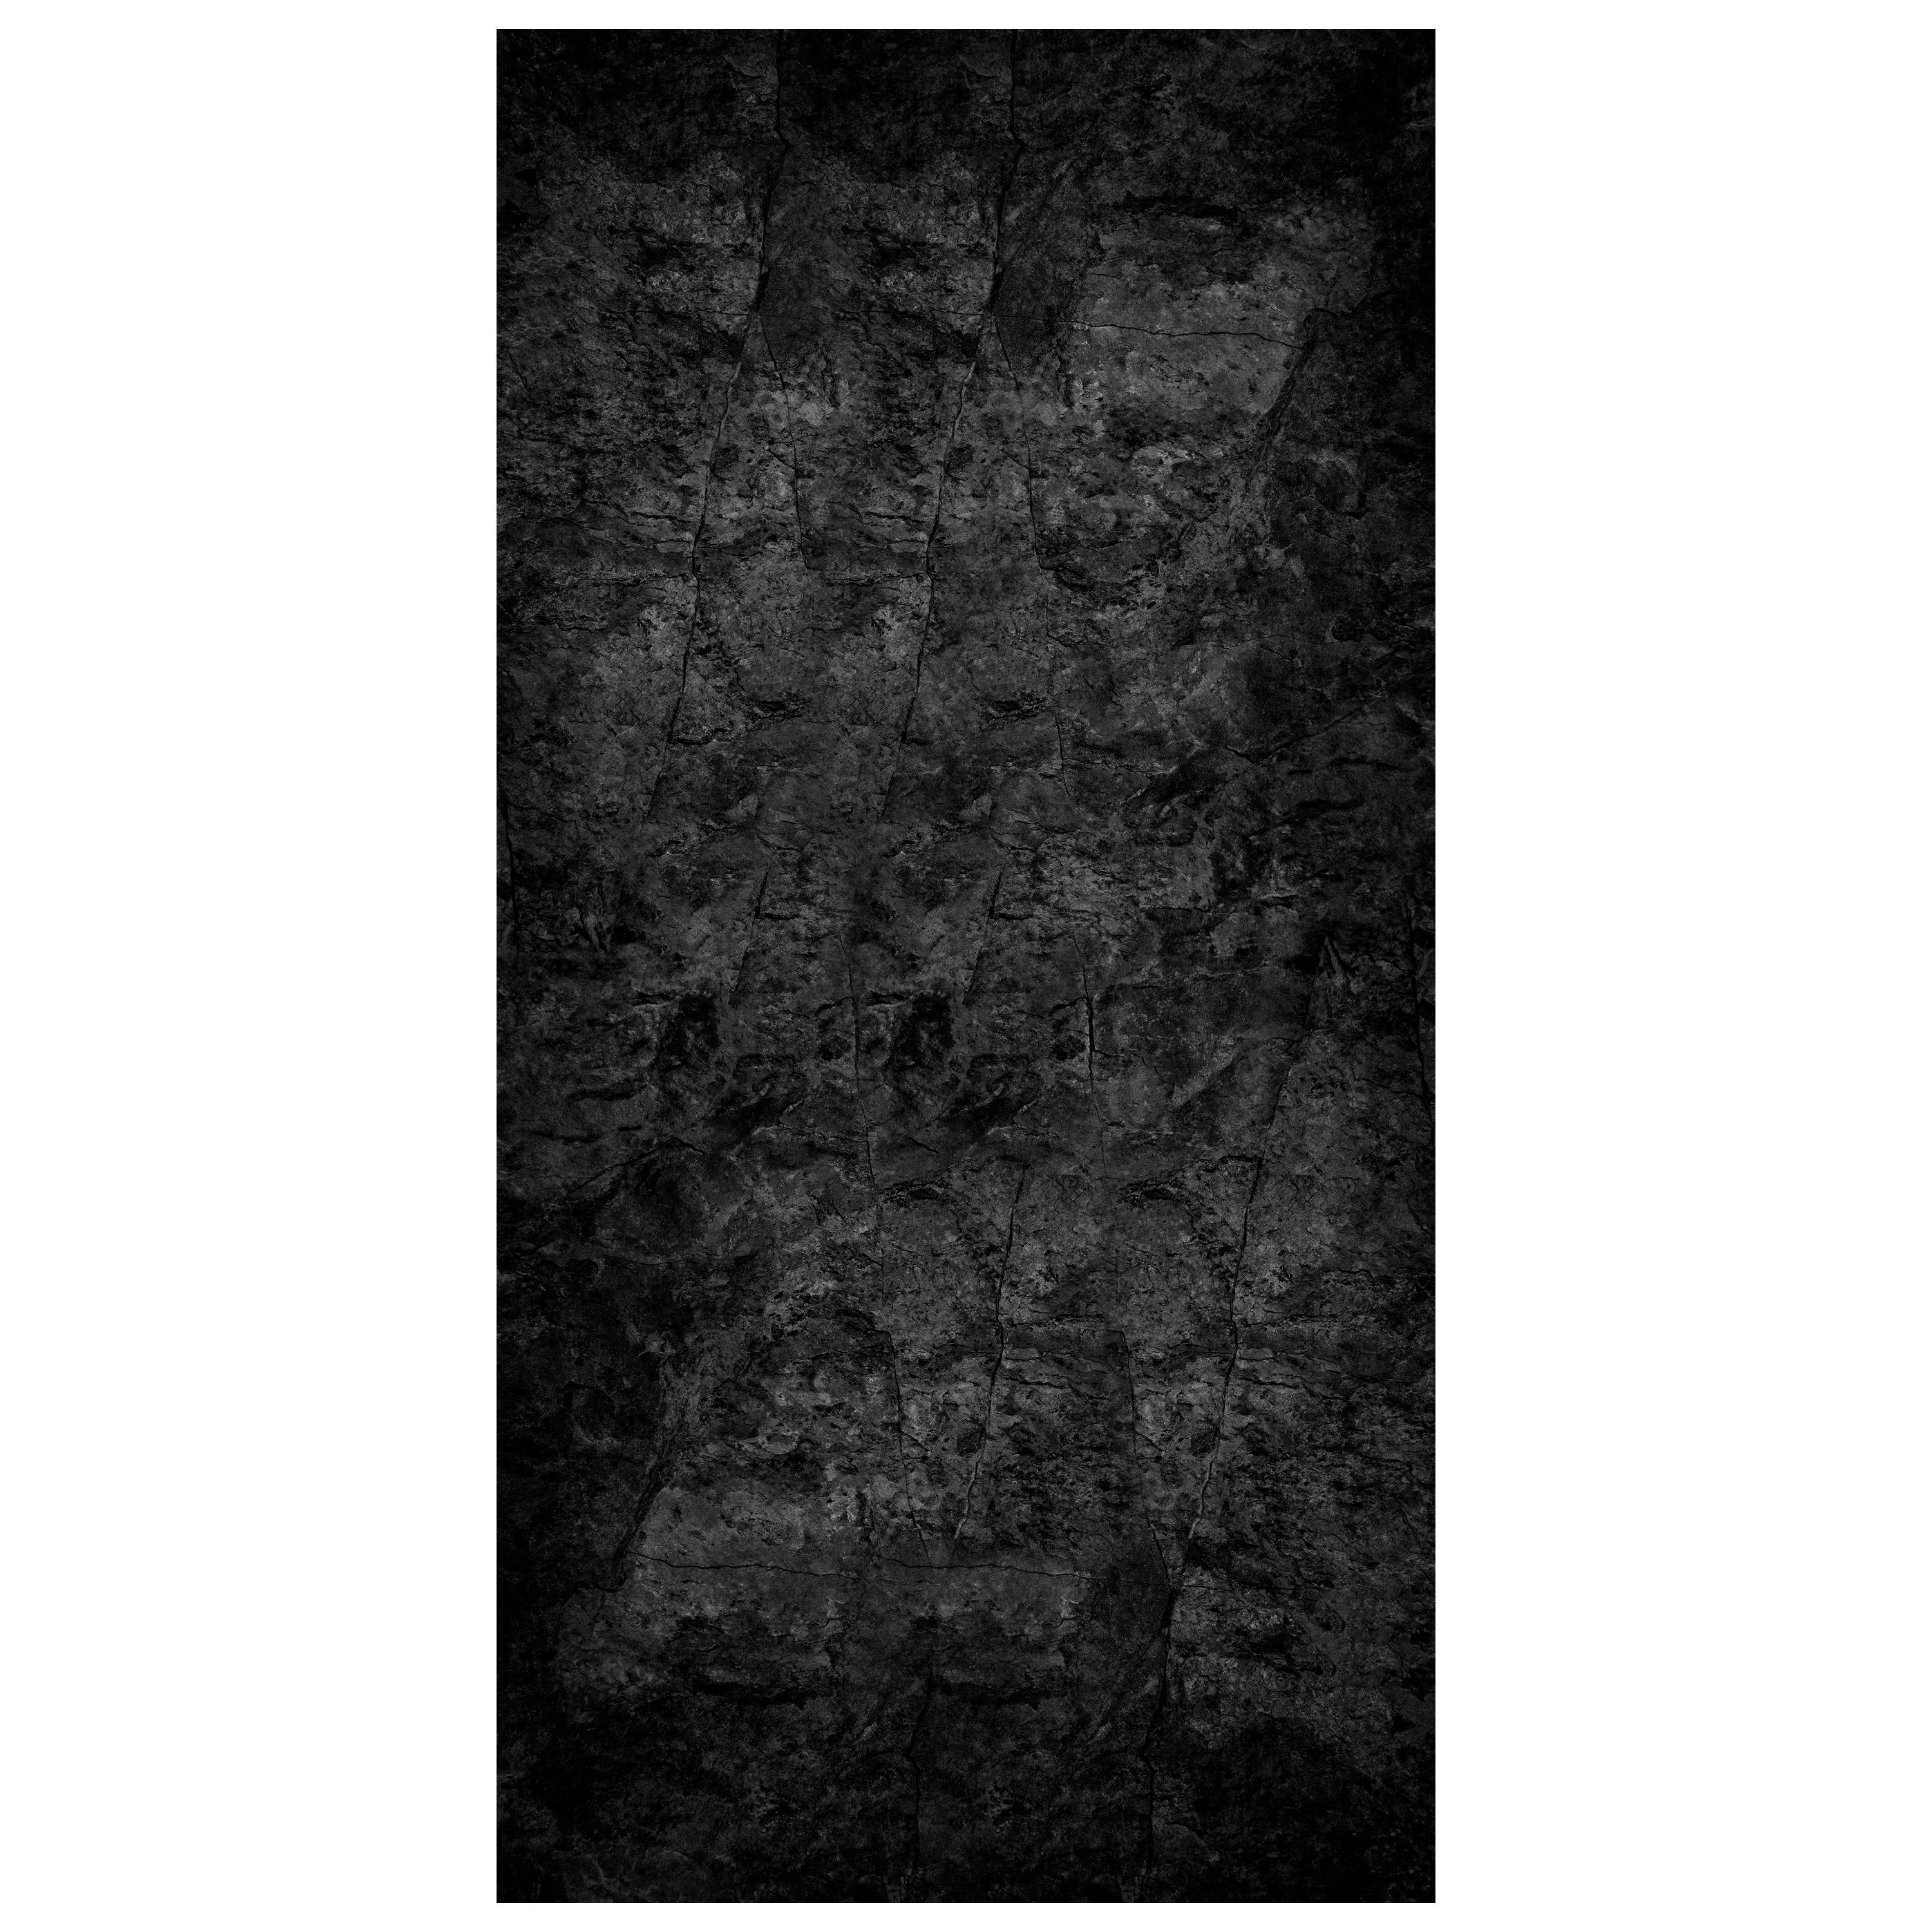 wandmotiv24 Türtapete schwarze Steinmauer, Risse, dunkel, glatt, Fototapete, Wandtapete, Motivtapete, matt, selbstklebende Dekorfolie